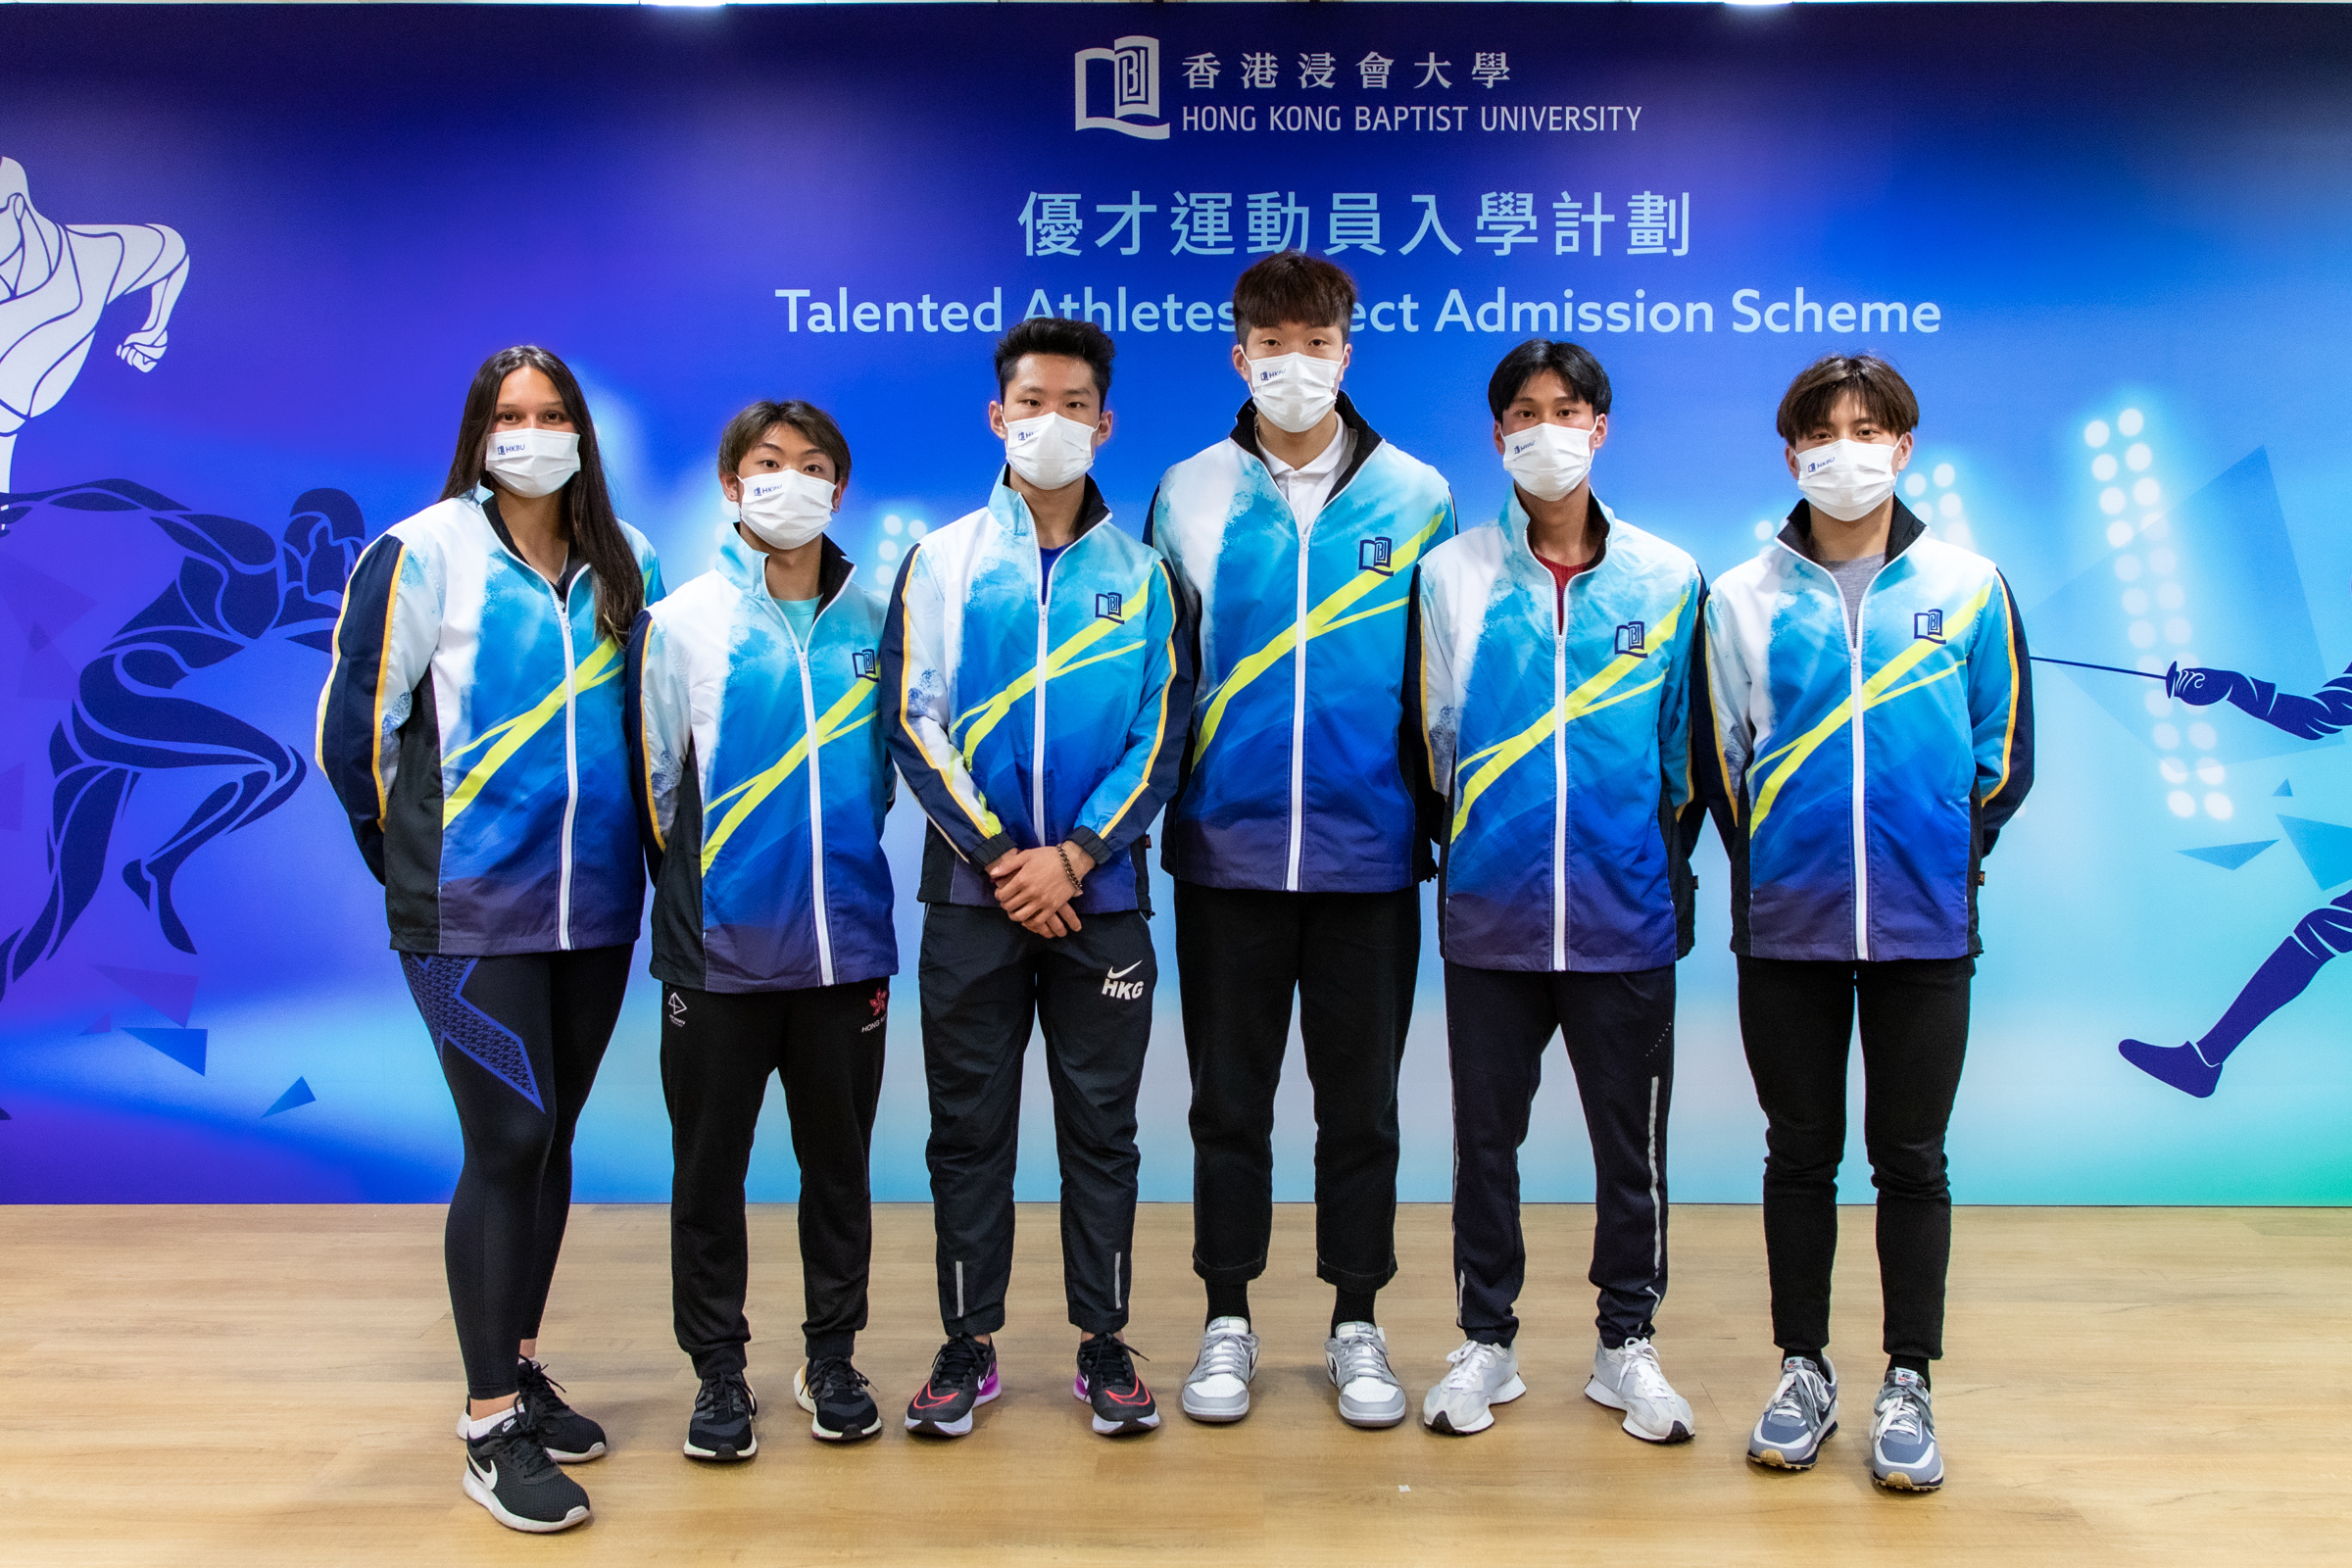 Six elite athletes embark on their studies at HKBU